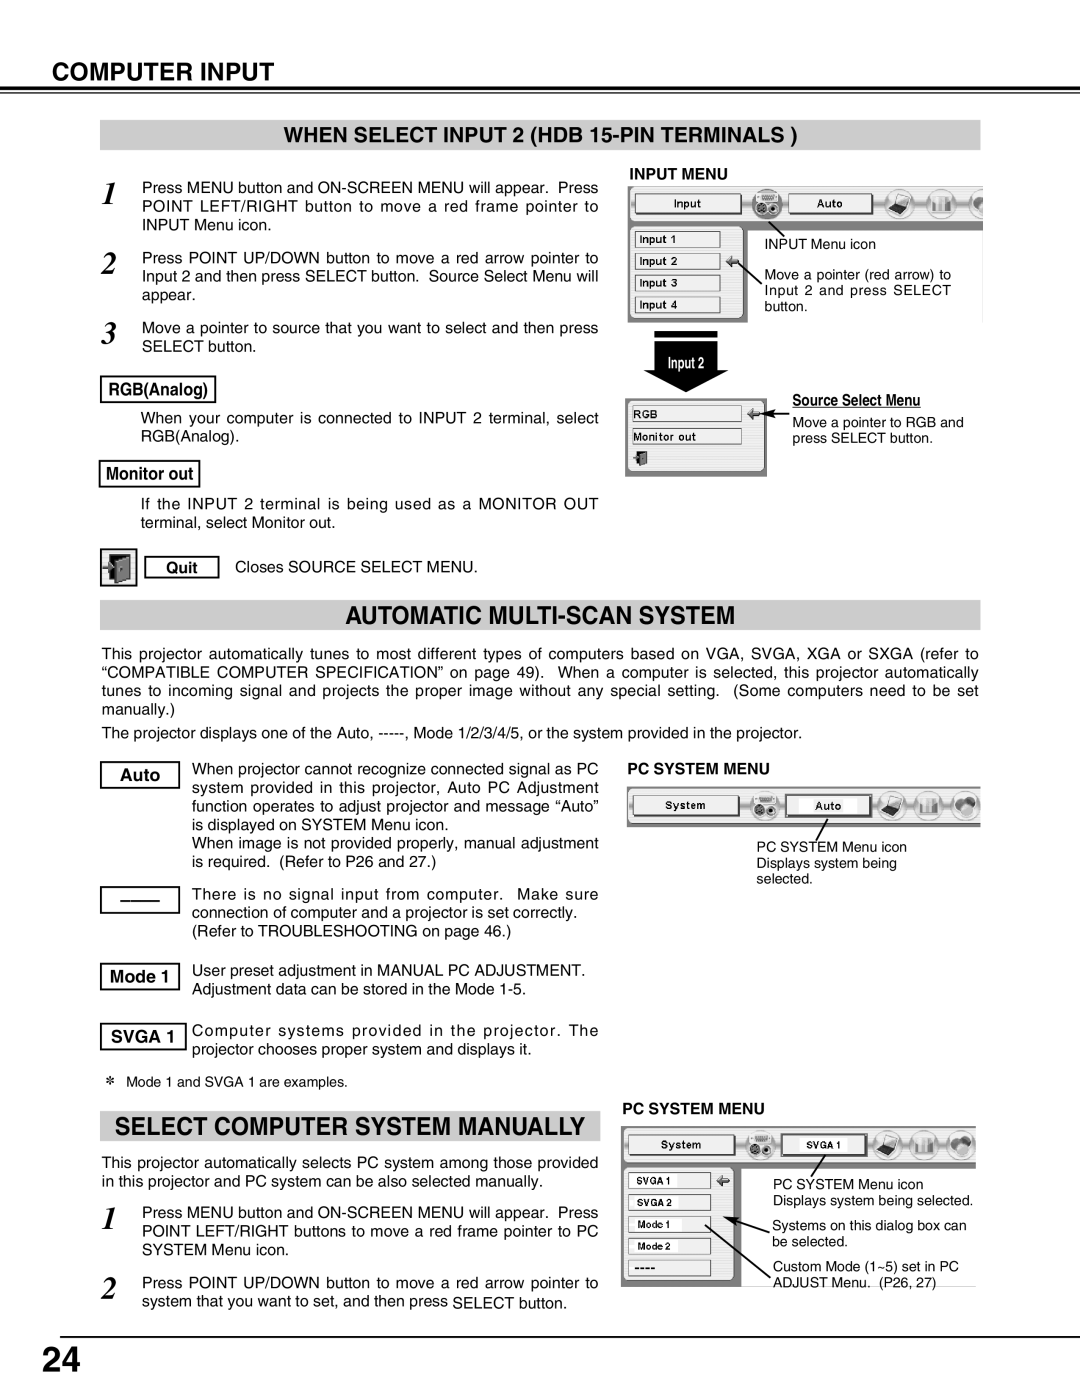 Eiki LC-X50 instruction manual Select Computer System Manually, Input Menu, Source Select Menu, Quit, Pc System Menu 